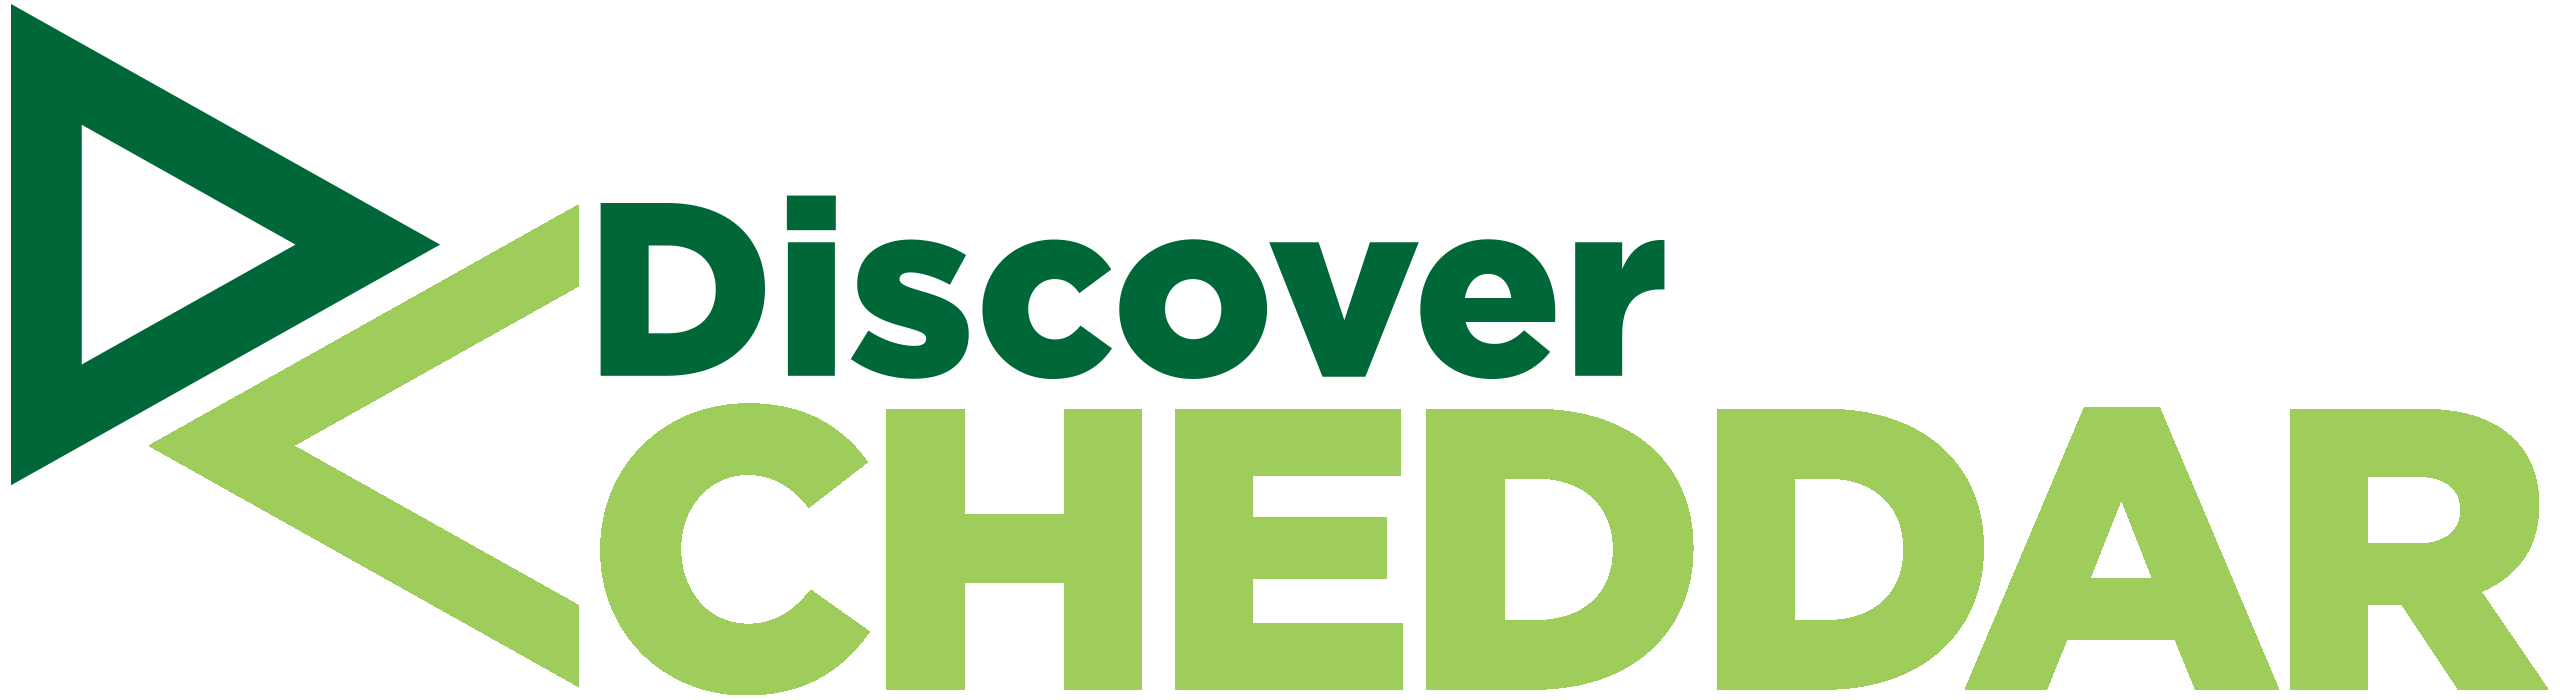 discover cheddar logo